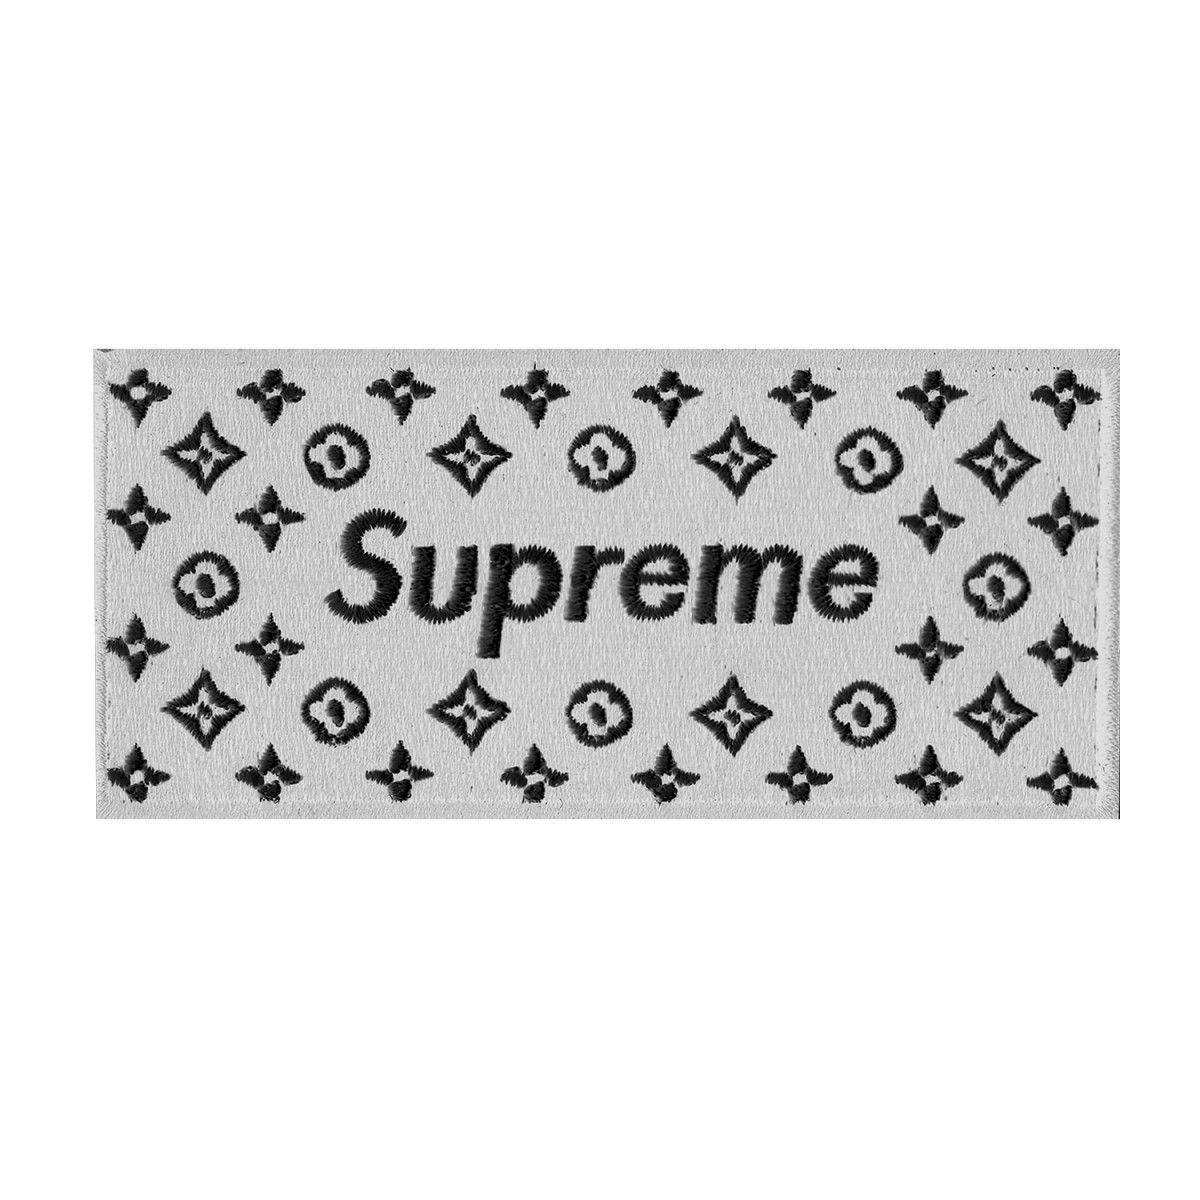 White Supreme Logo - LogoDix